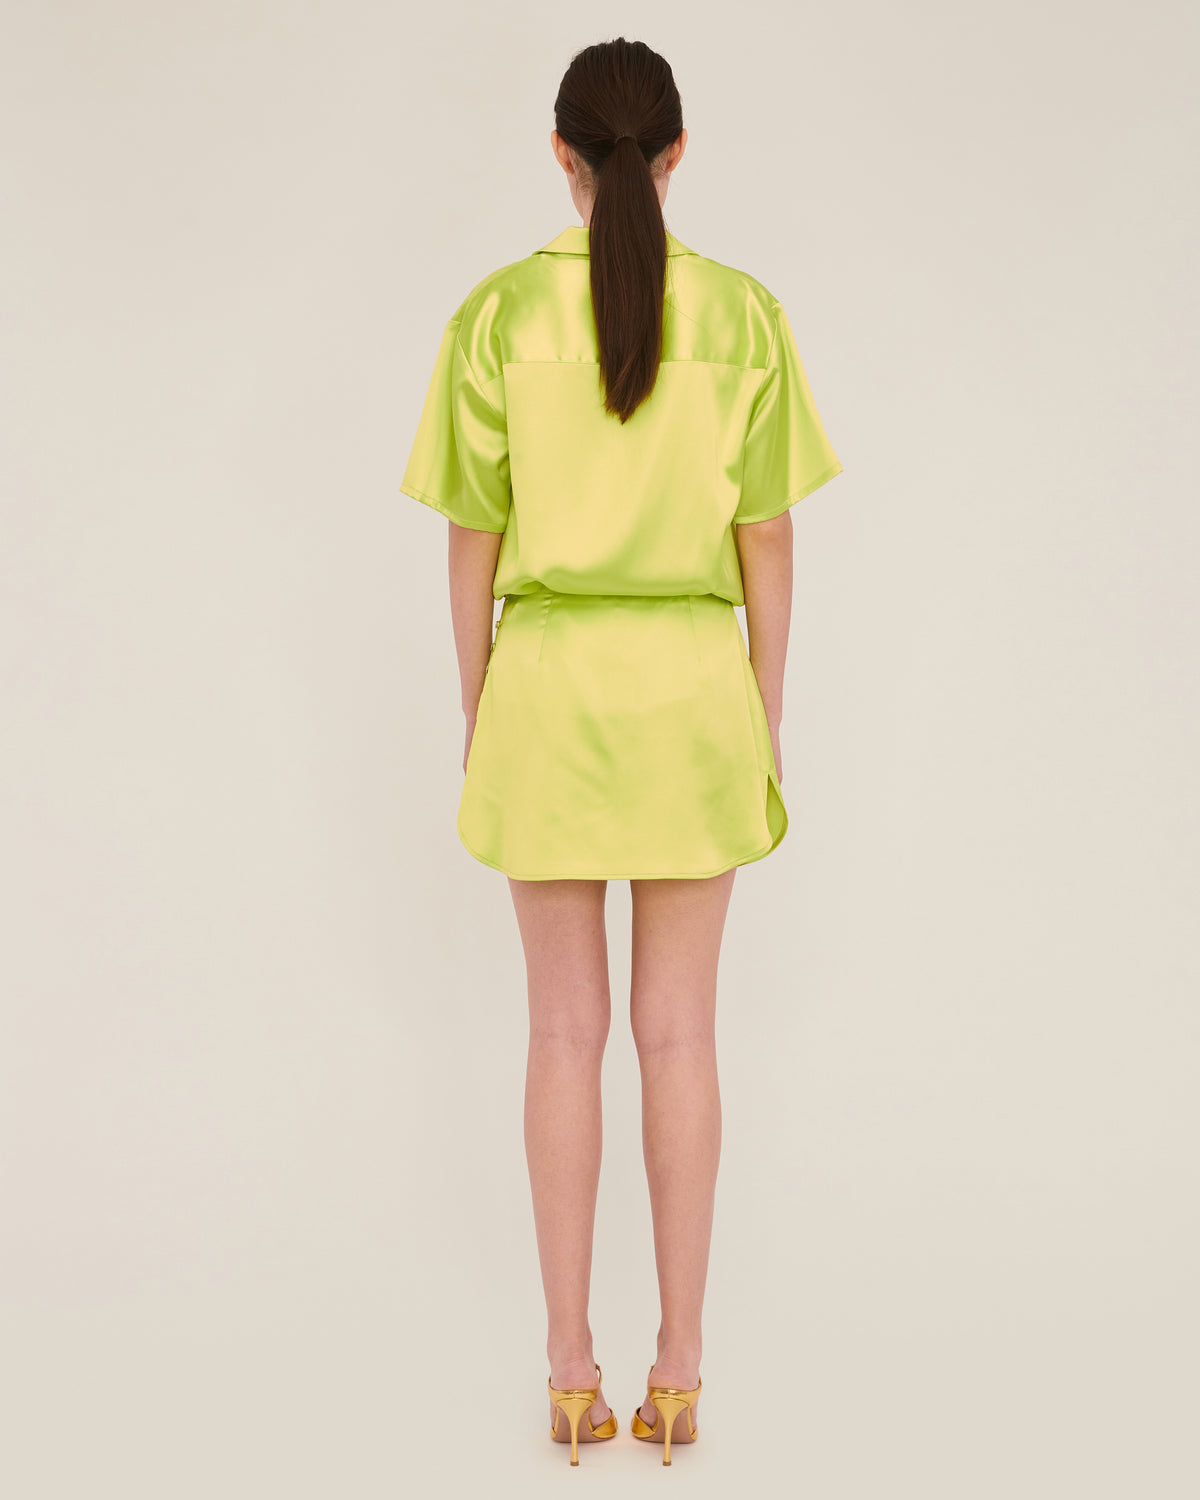 Kyle Satin Slip Mini Skirt in Neon Lime | MARISSA WEBB